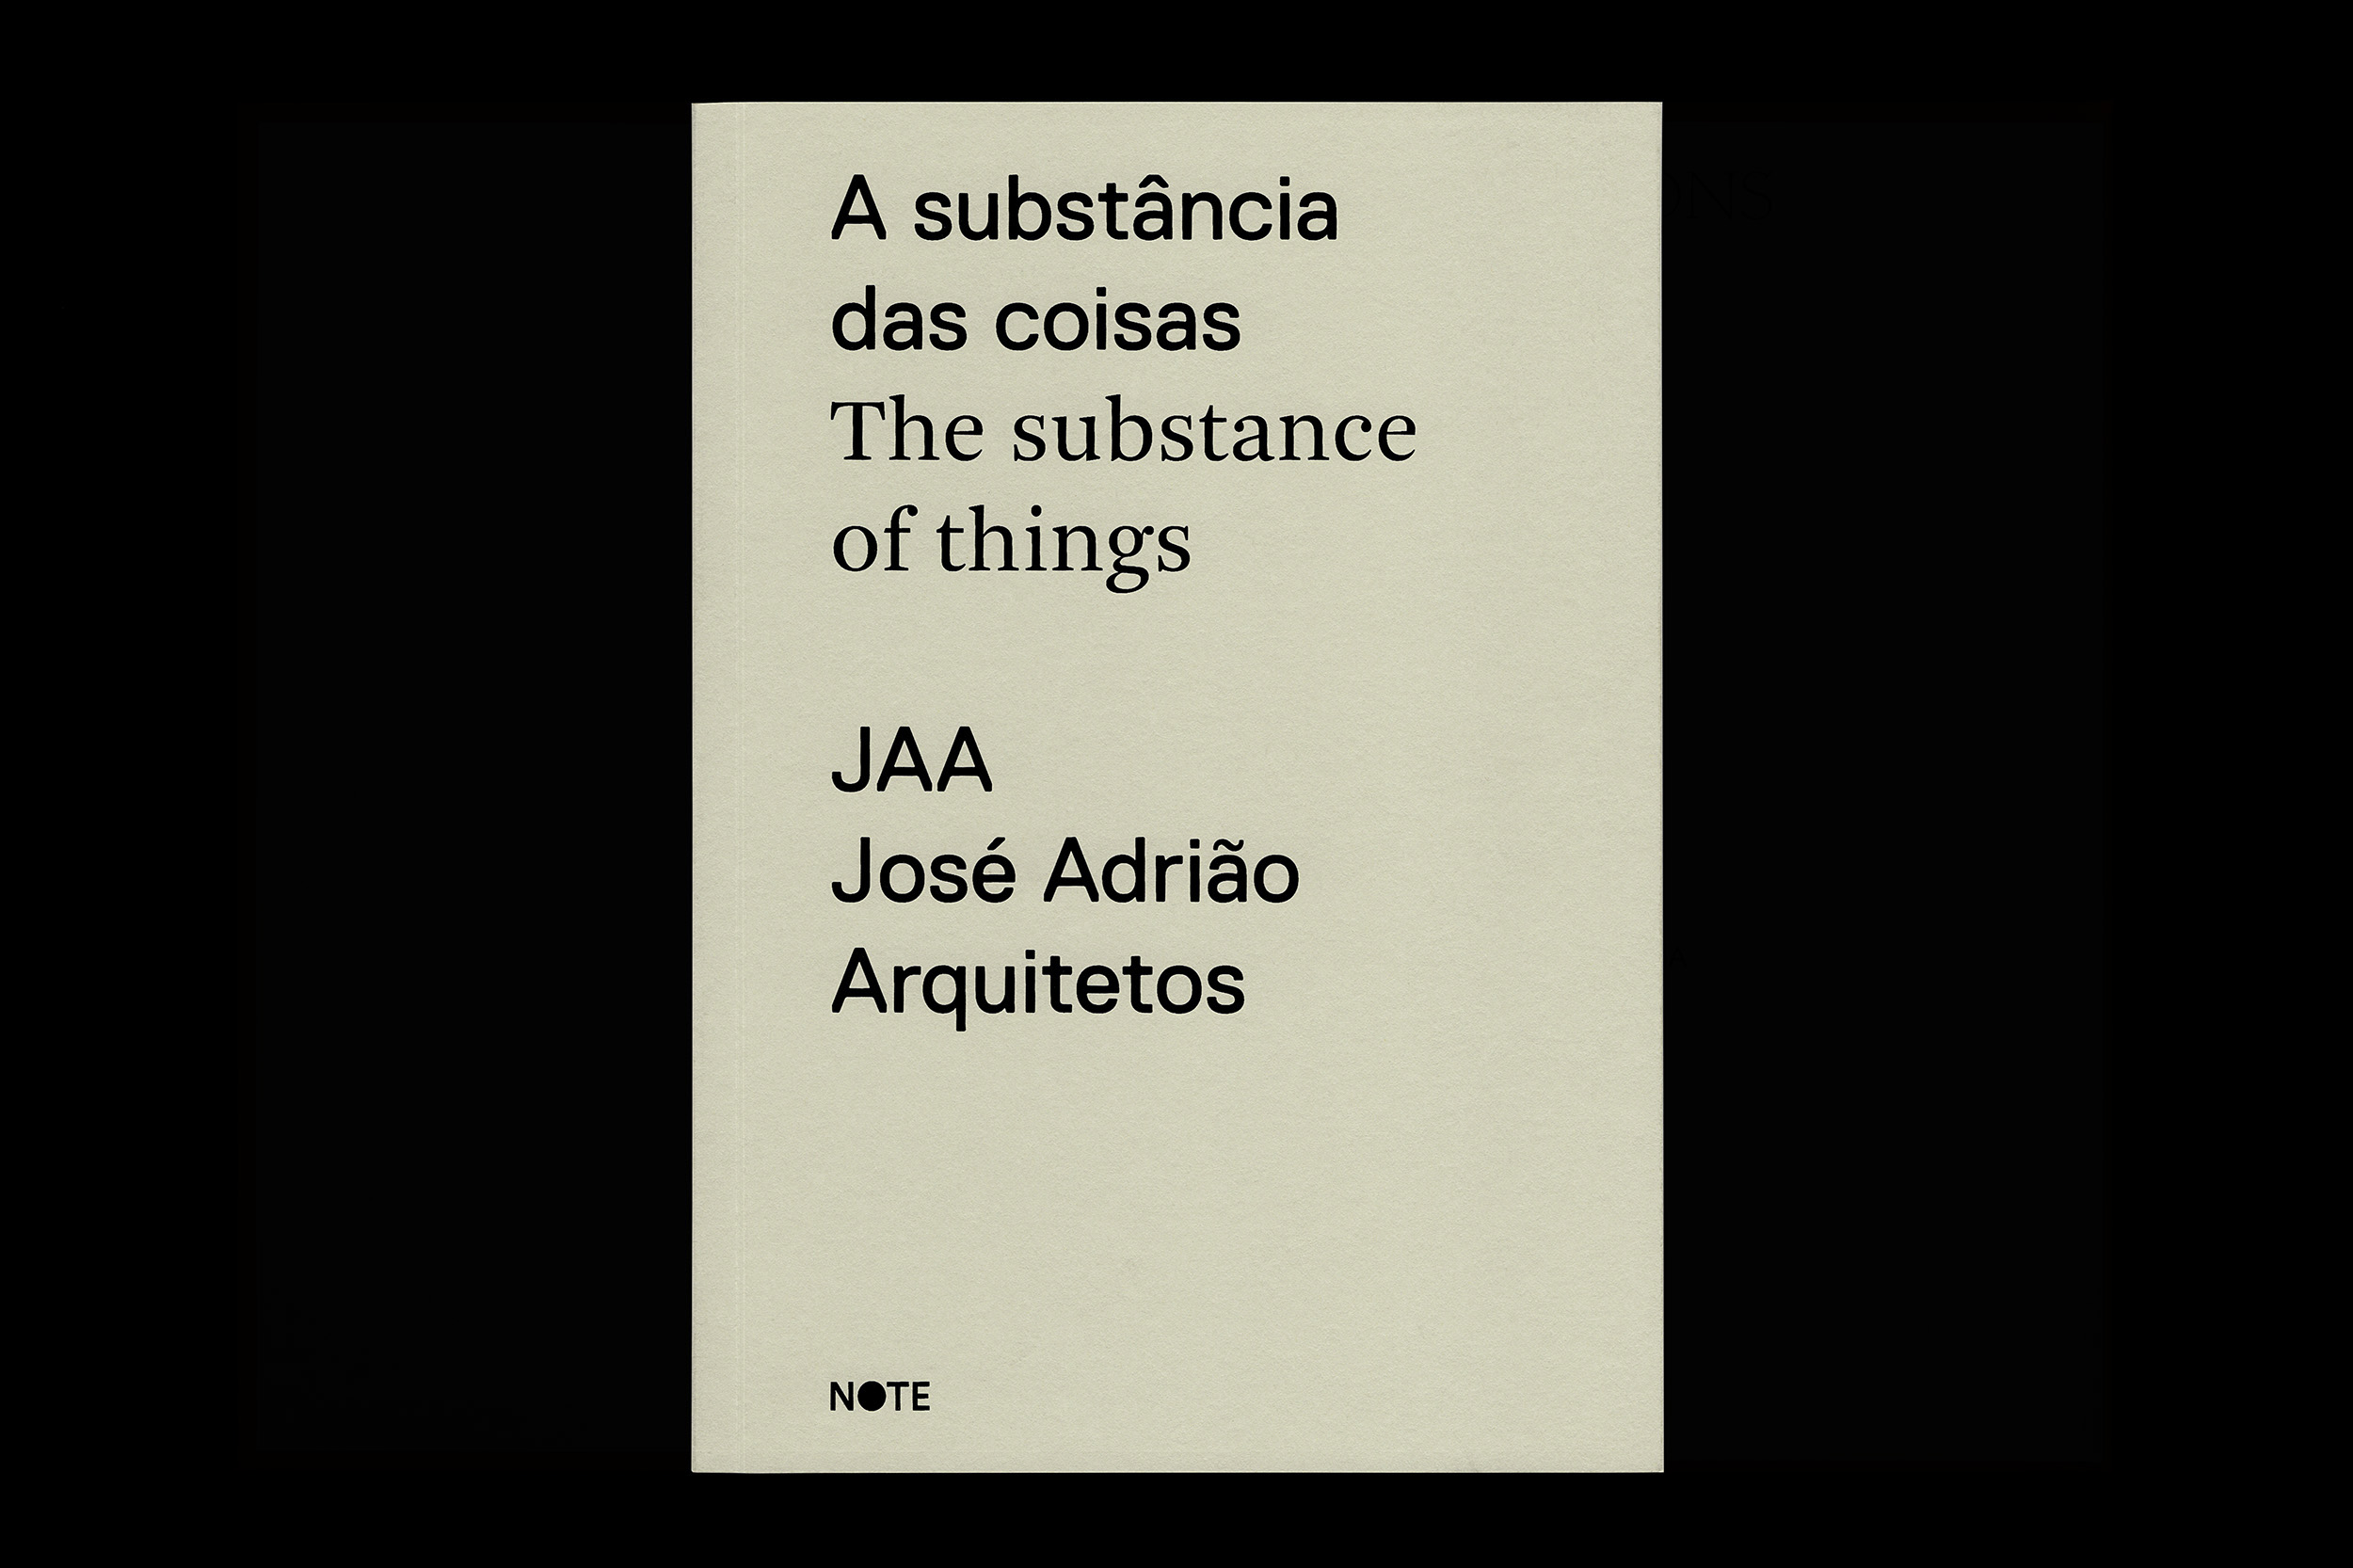 João M. Machado – JAA – The Substance of Things (1 of 13)